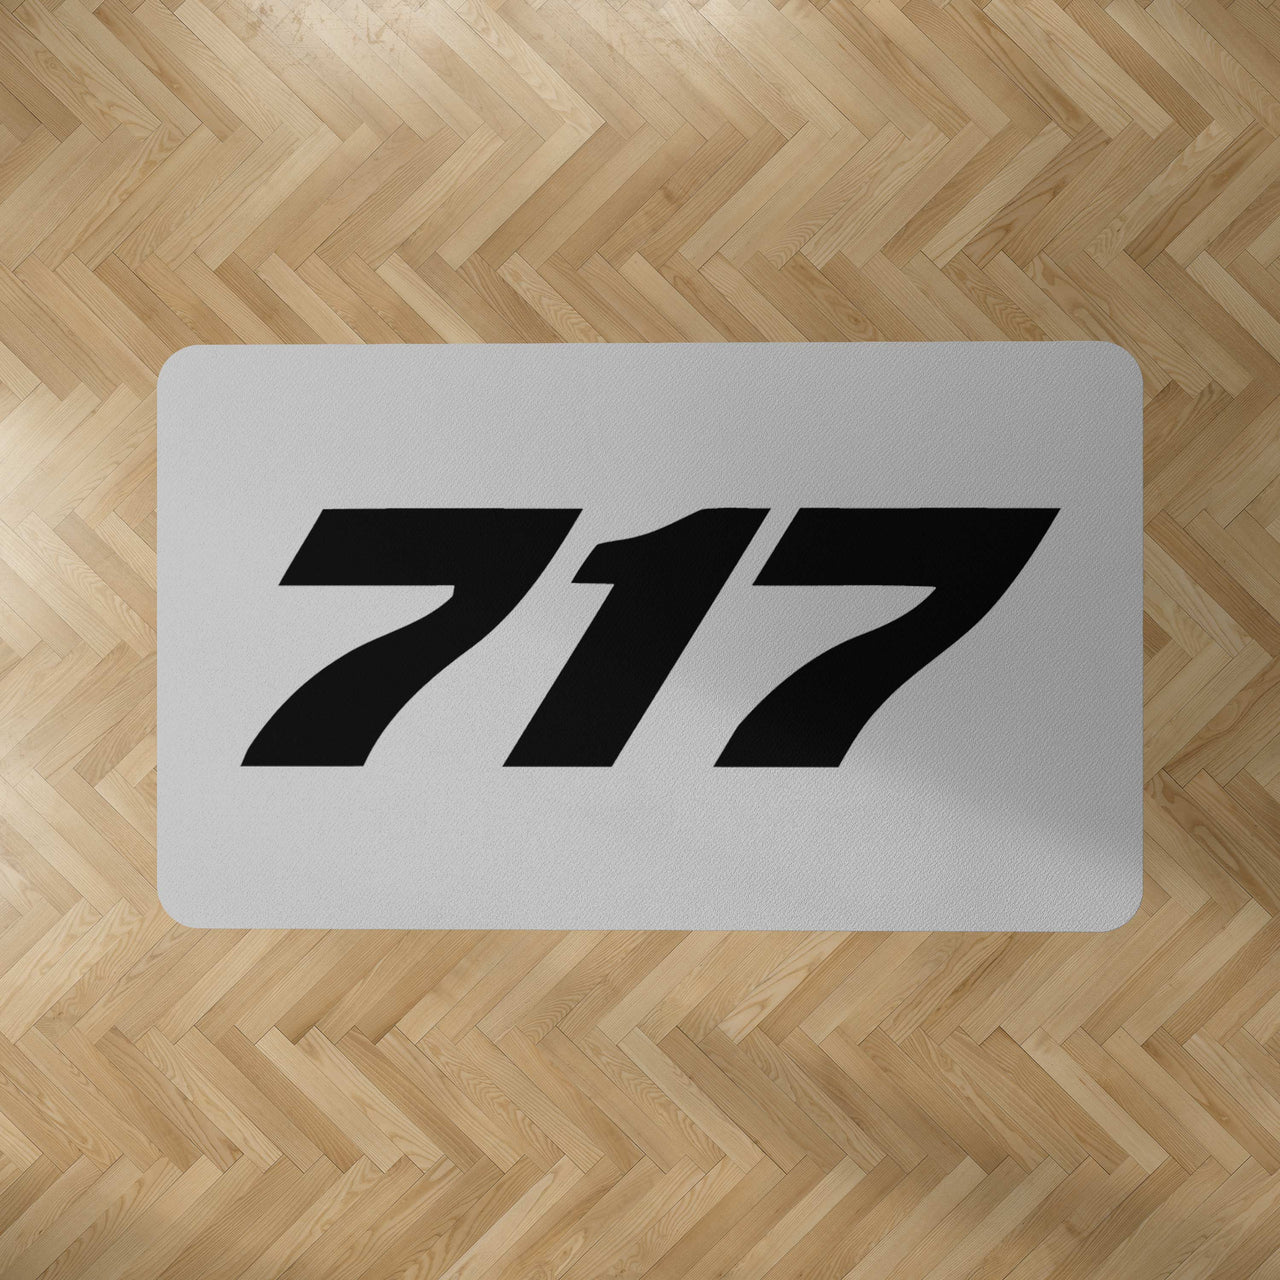 717 Flat Text Designed Carpet & Floor Mats